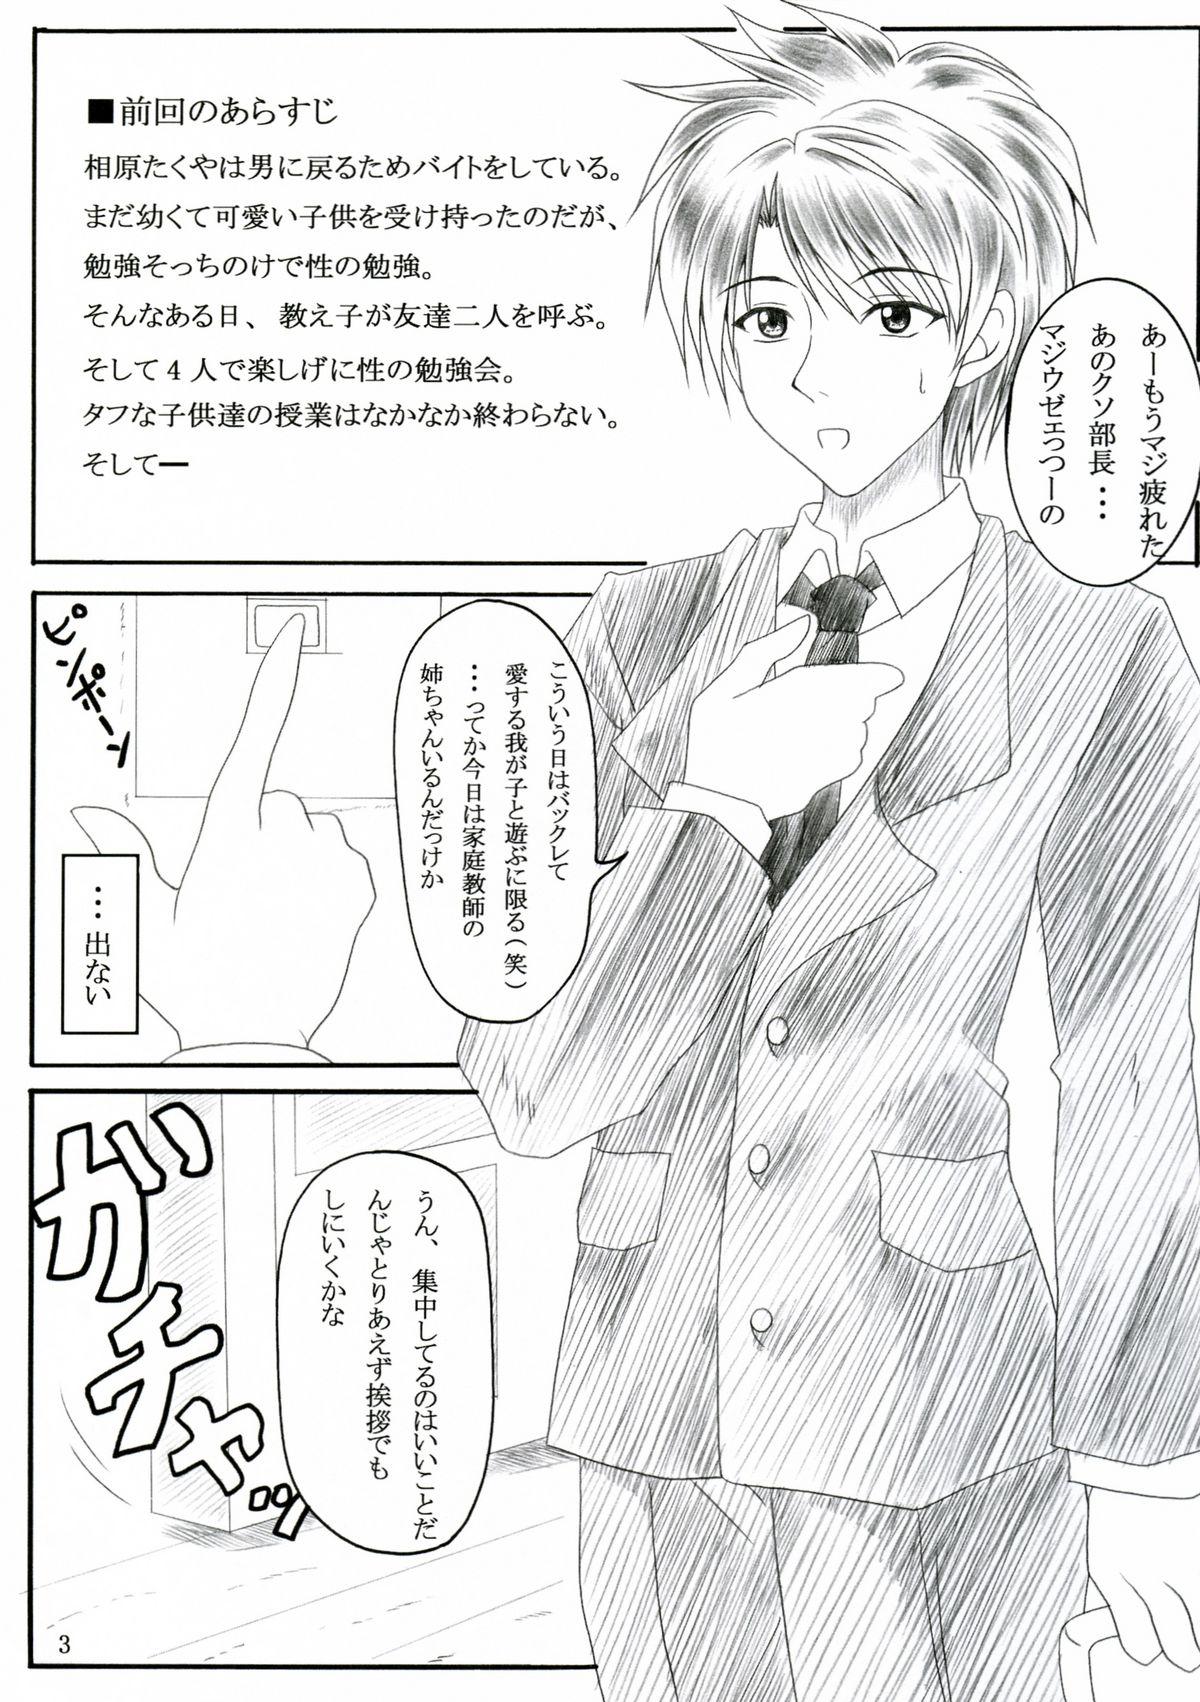 Anime Minna de ii Koto Shiyo - X change Friend - Page 2